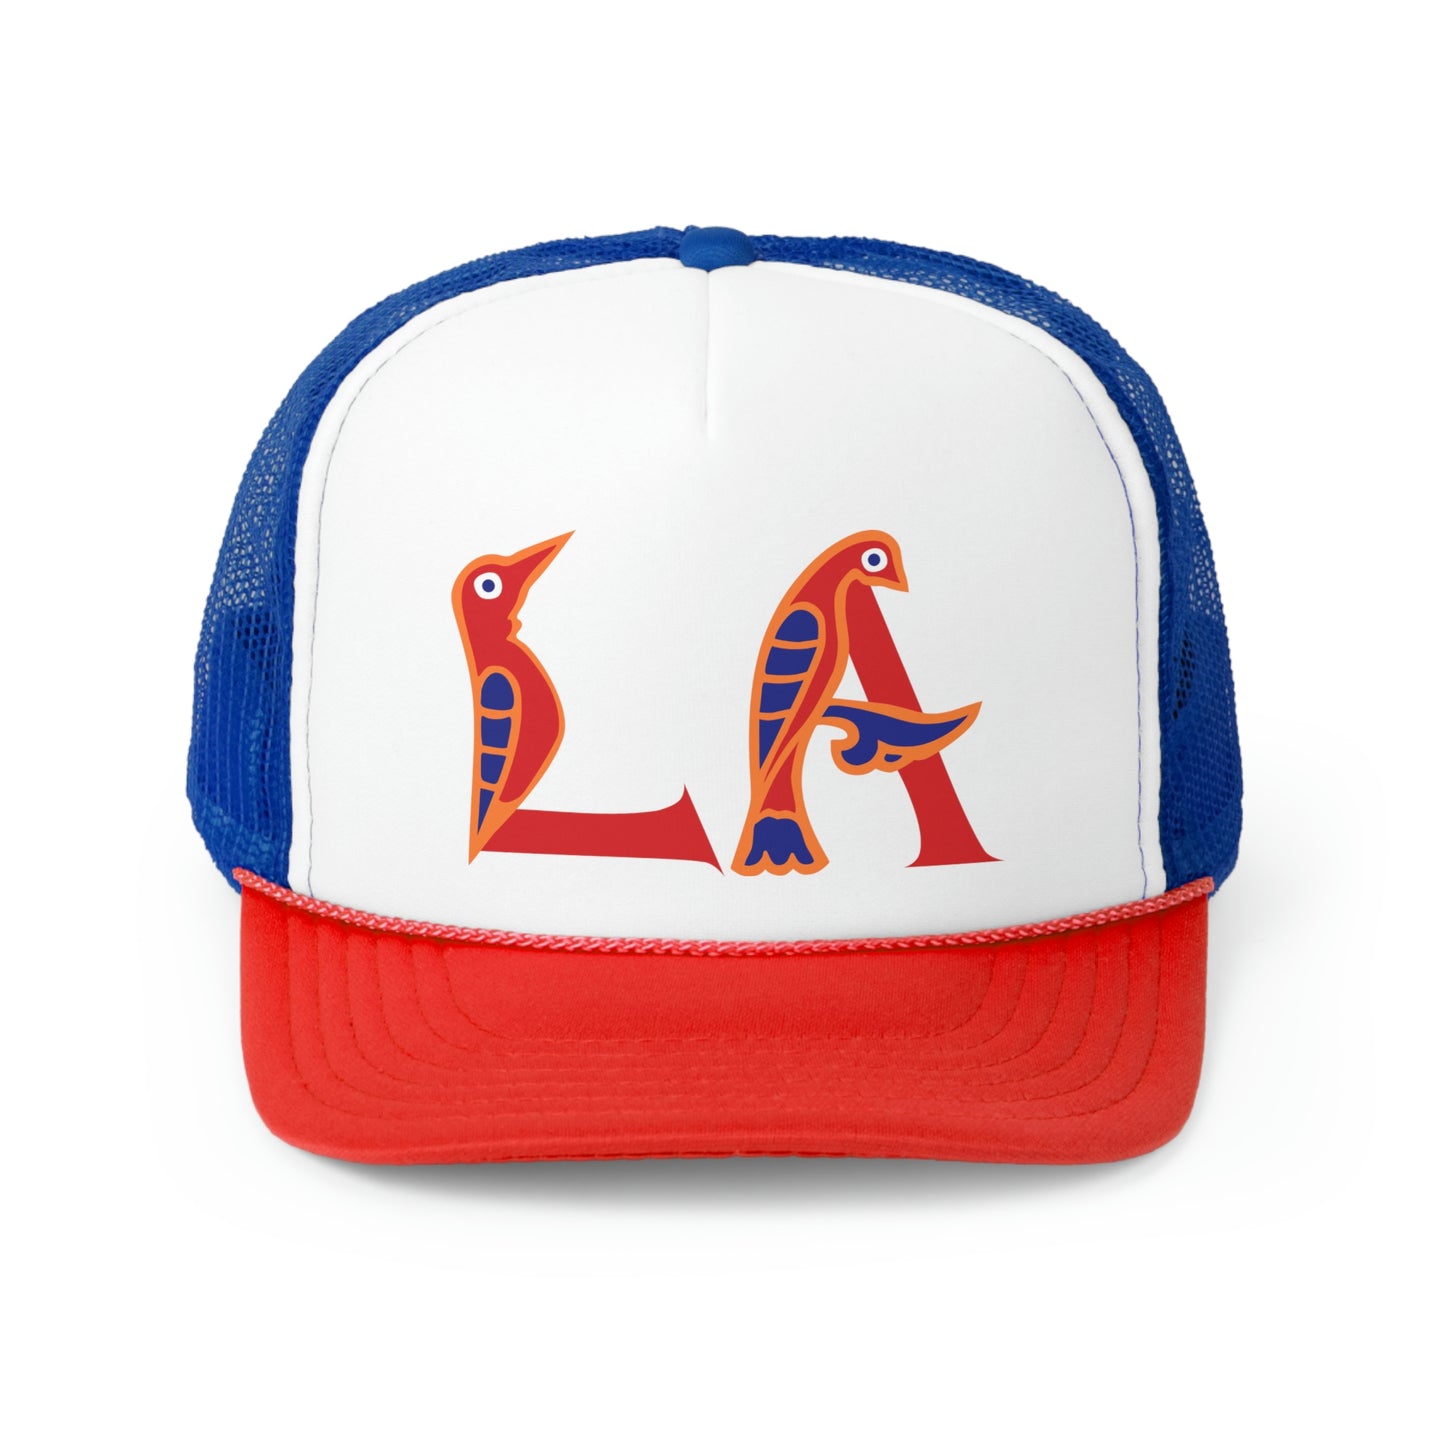 LA Bird-Letter Red-Blue Trucker Cap - Bold & Stylish Accessory